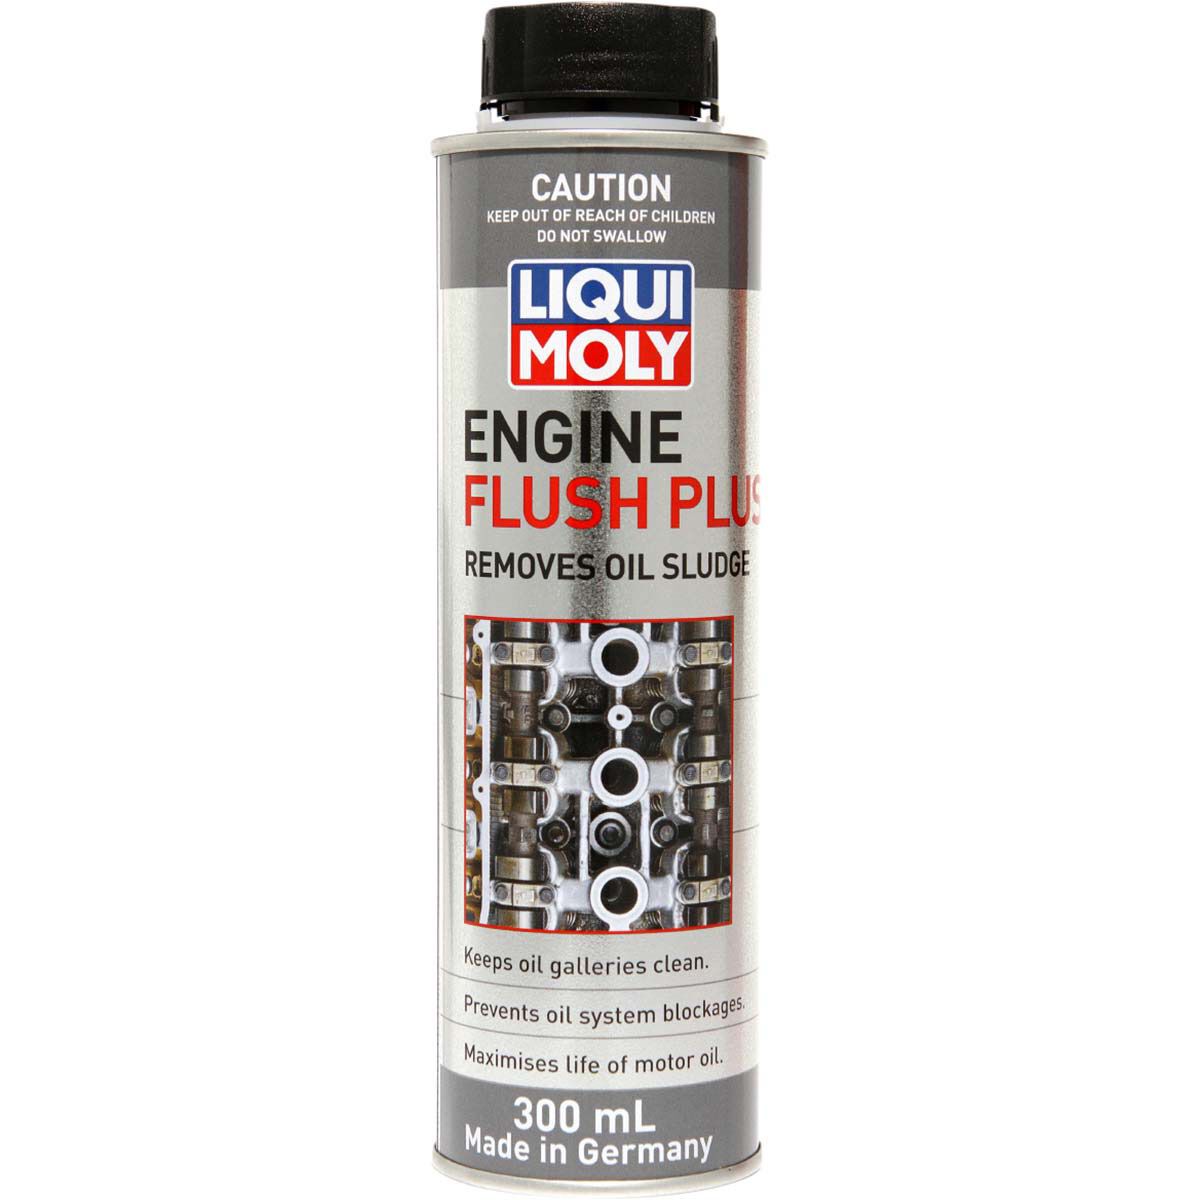 LIQUI MOLY Engine Flush Plus - 300mL | Supercheap Auto